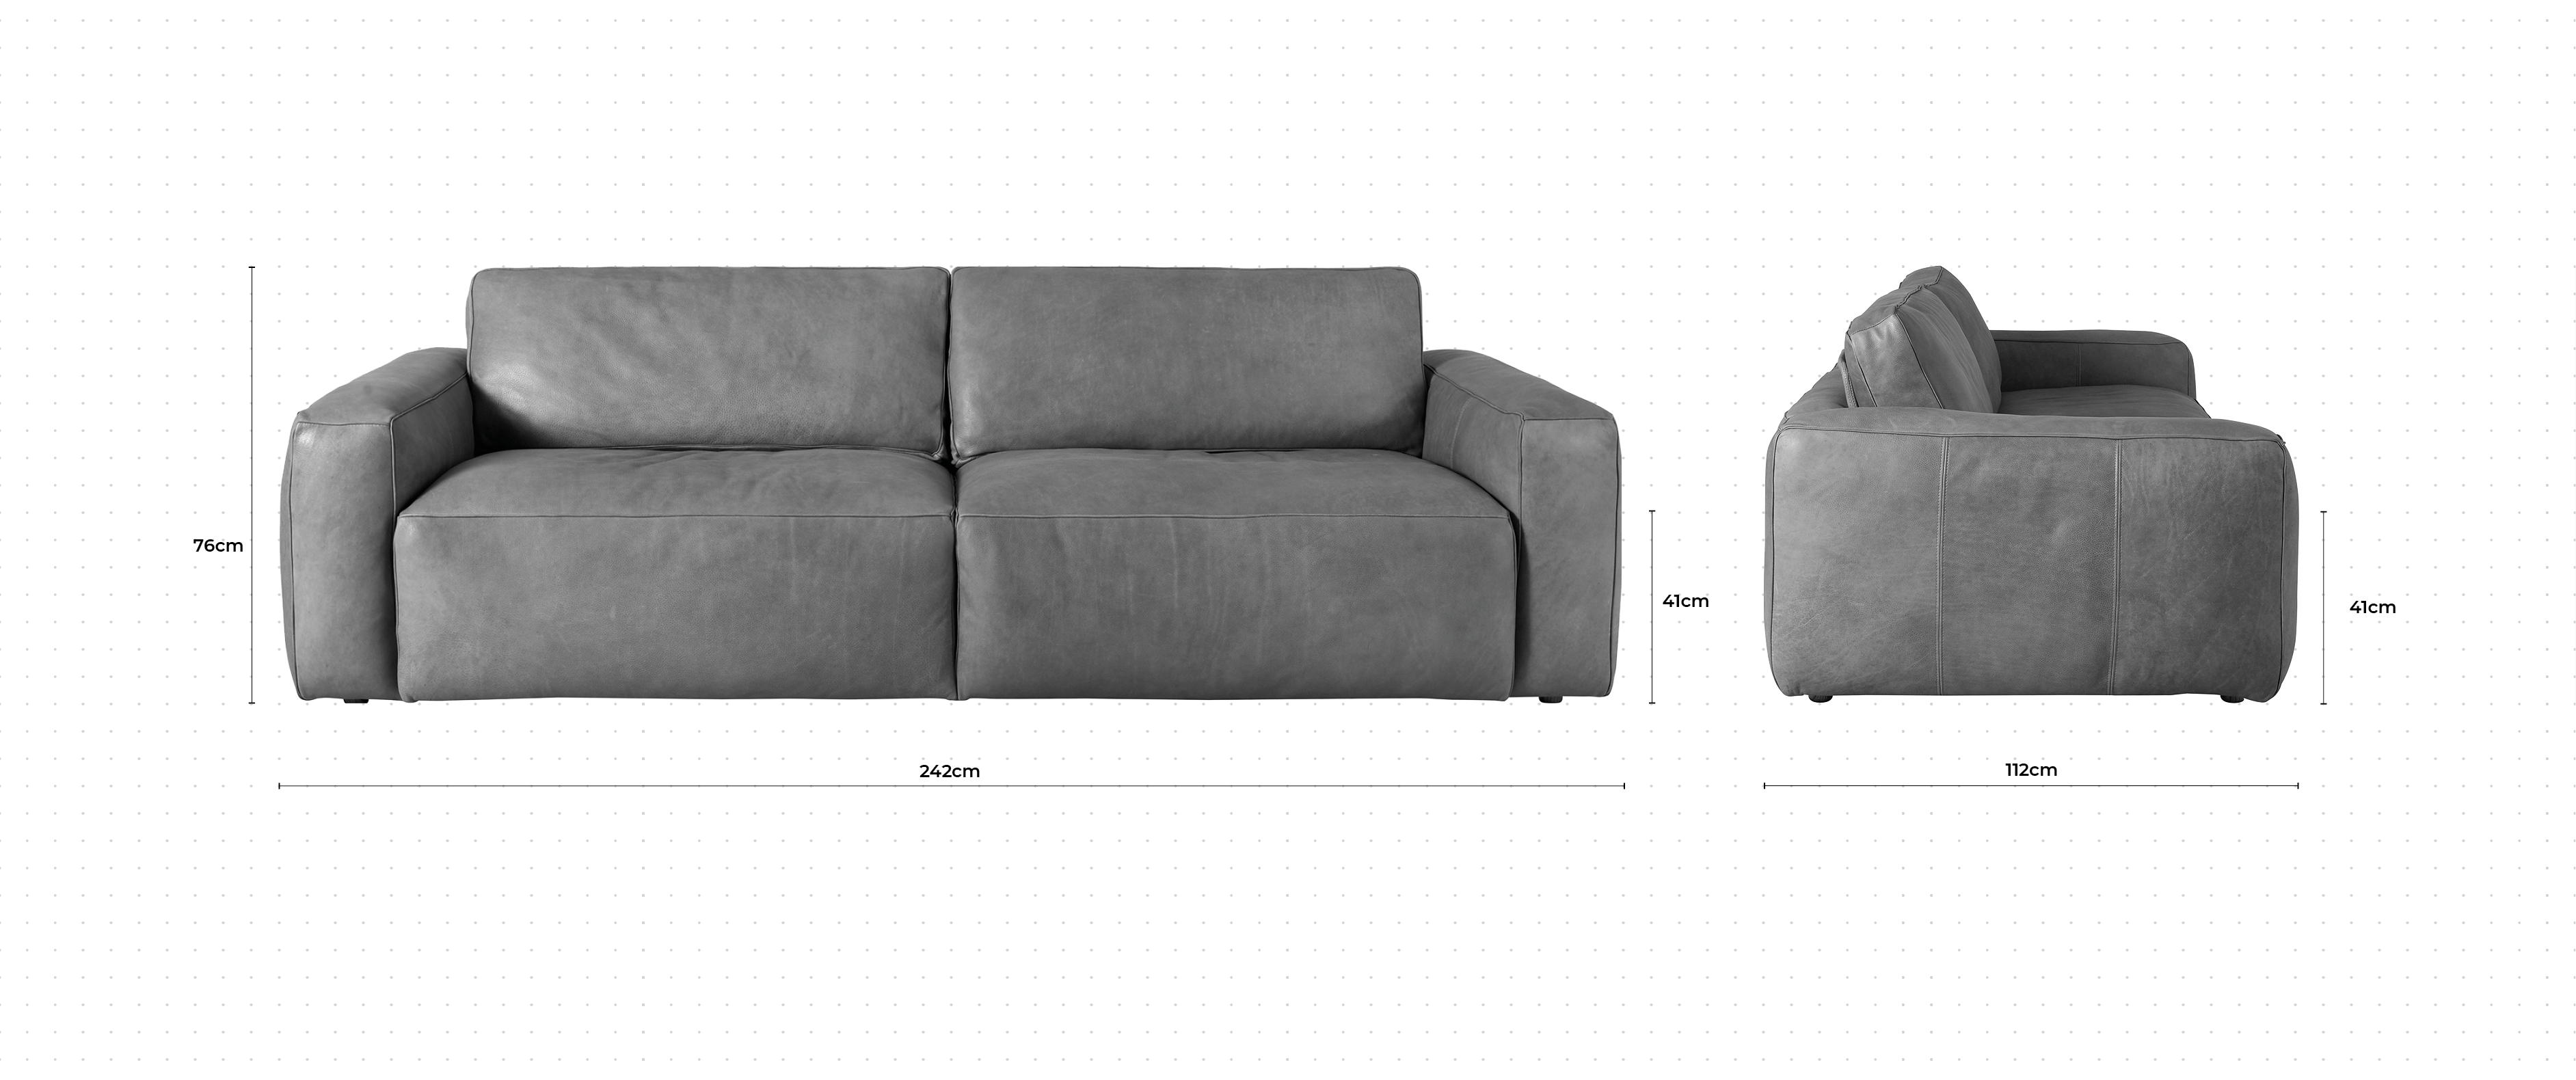 Truffle 3 Seater Sofa dimensions